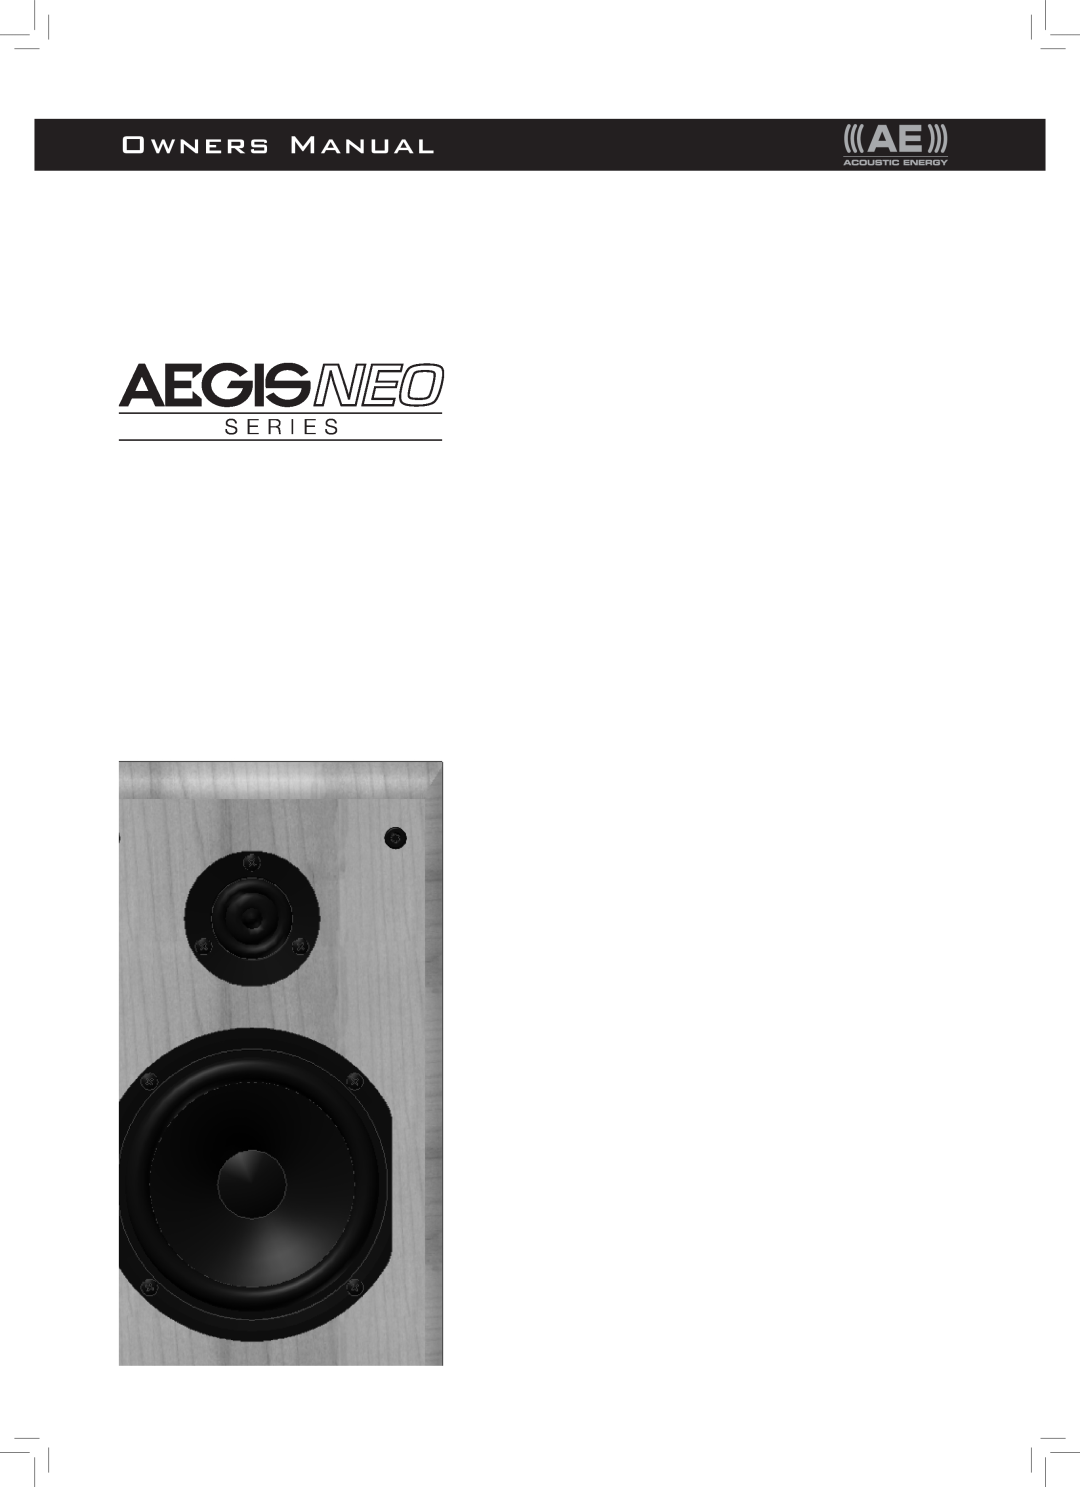 Aegis Micro AegisNeo Series owner manual S E R I E S 